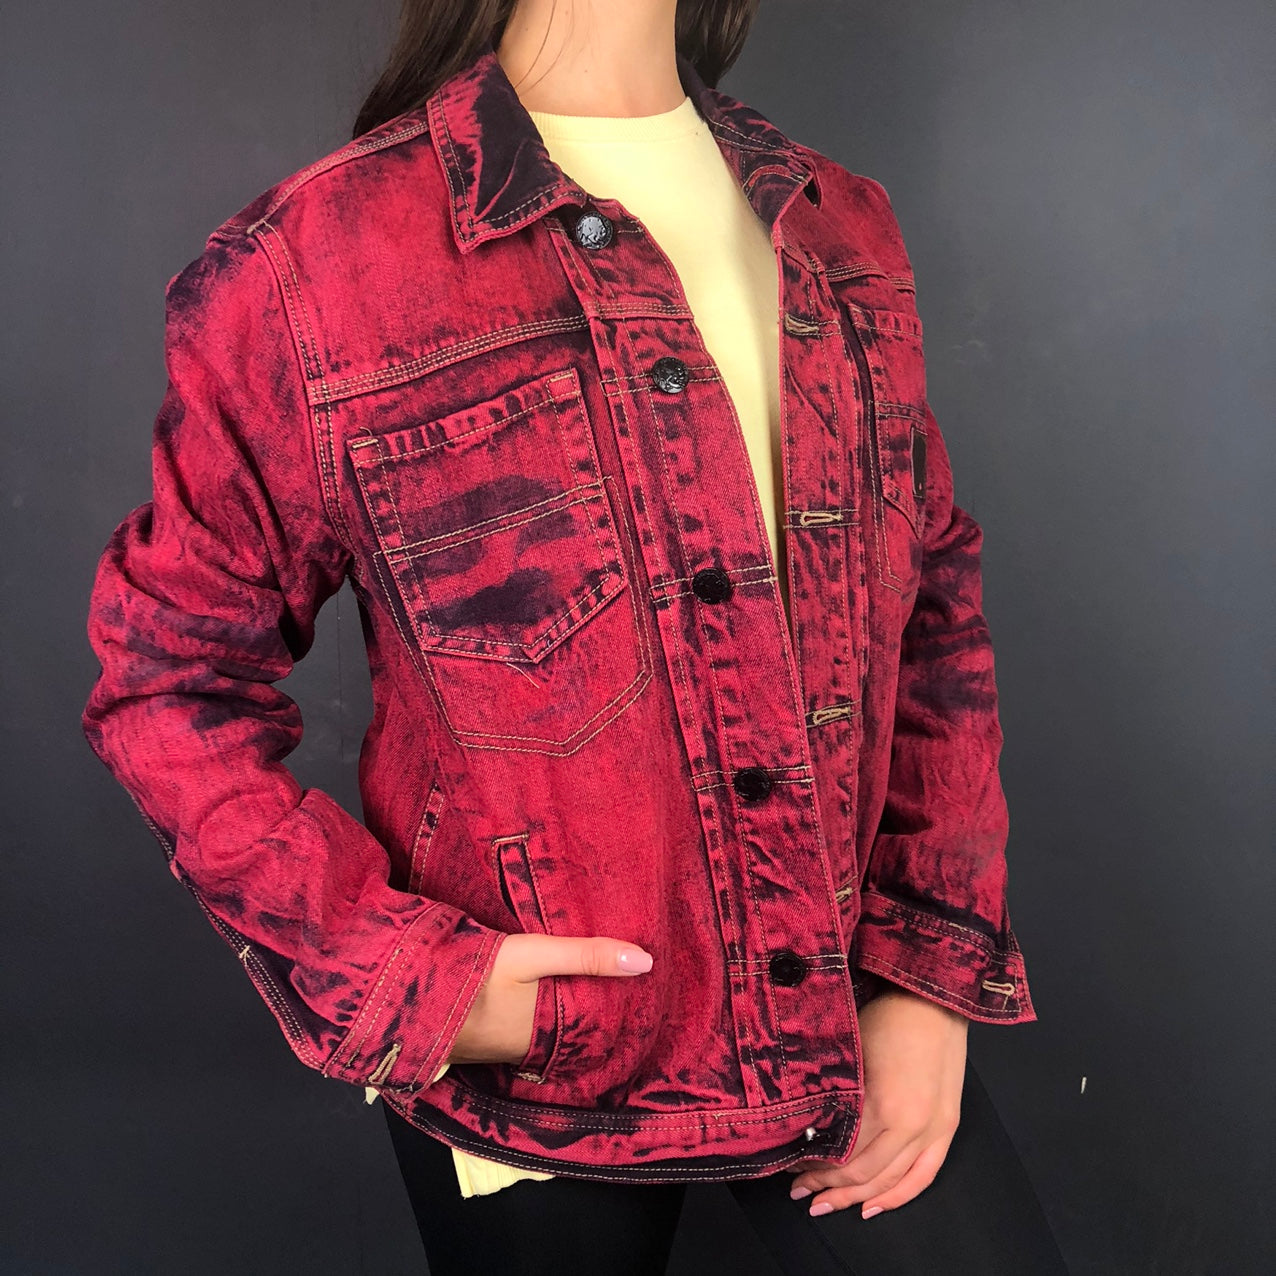 Vintage Denim Jacket in a Red Acid Wash - Medium